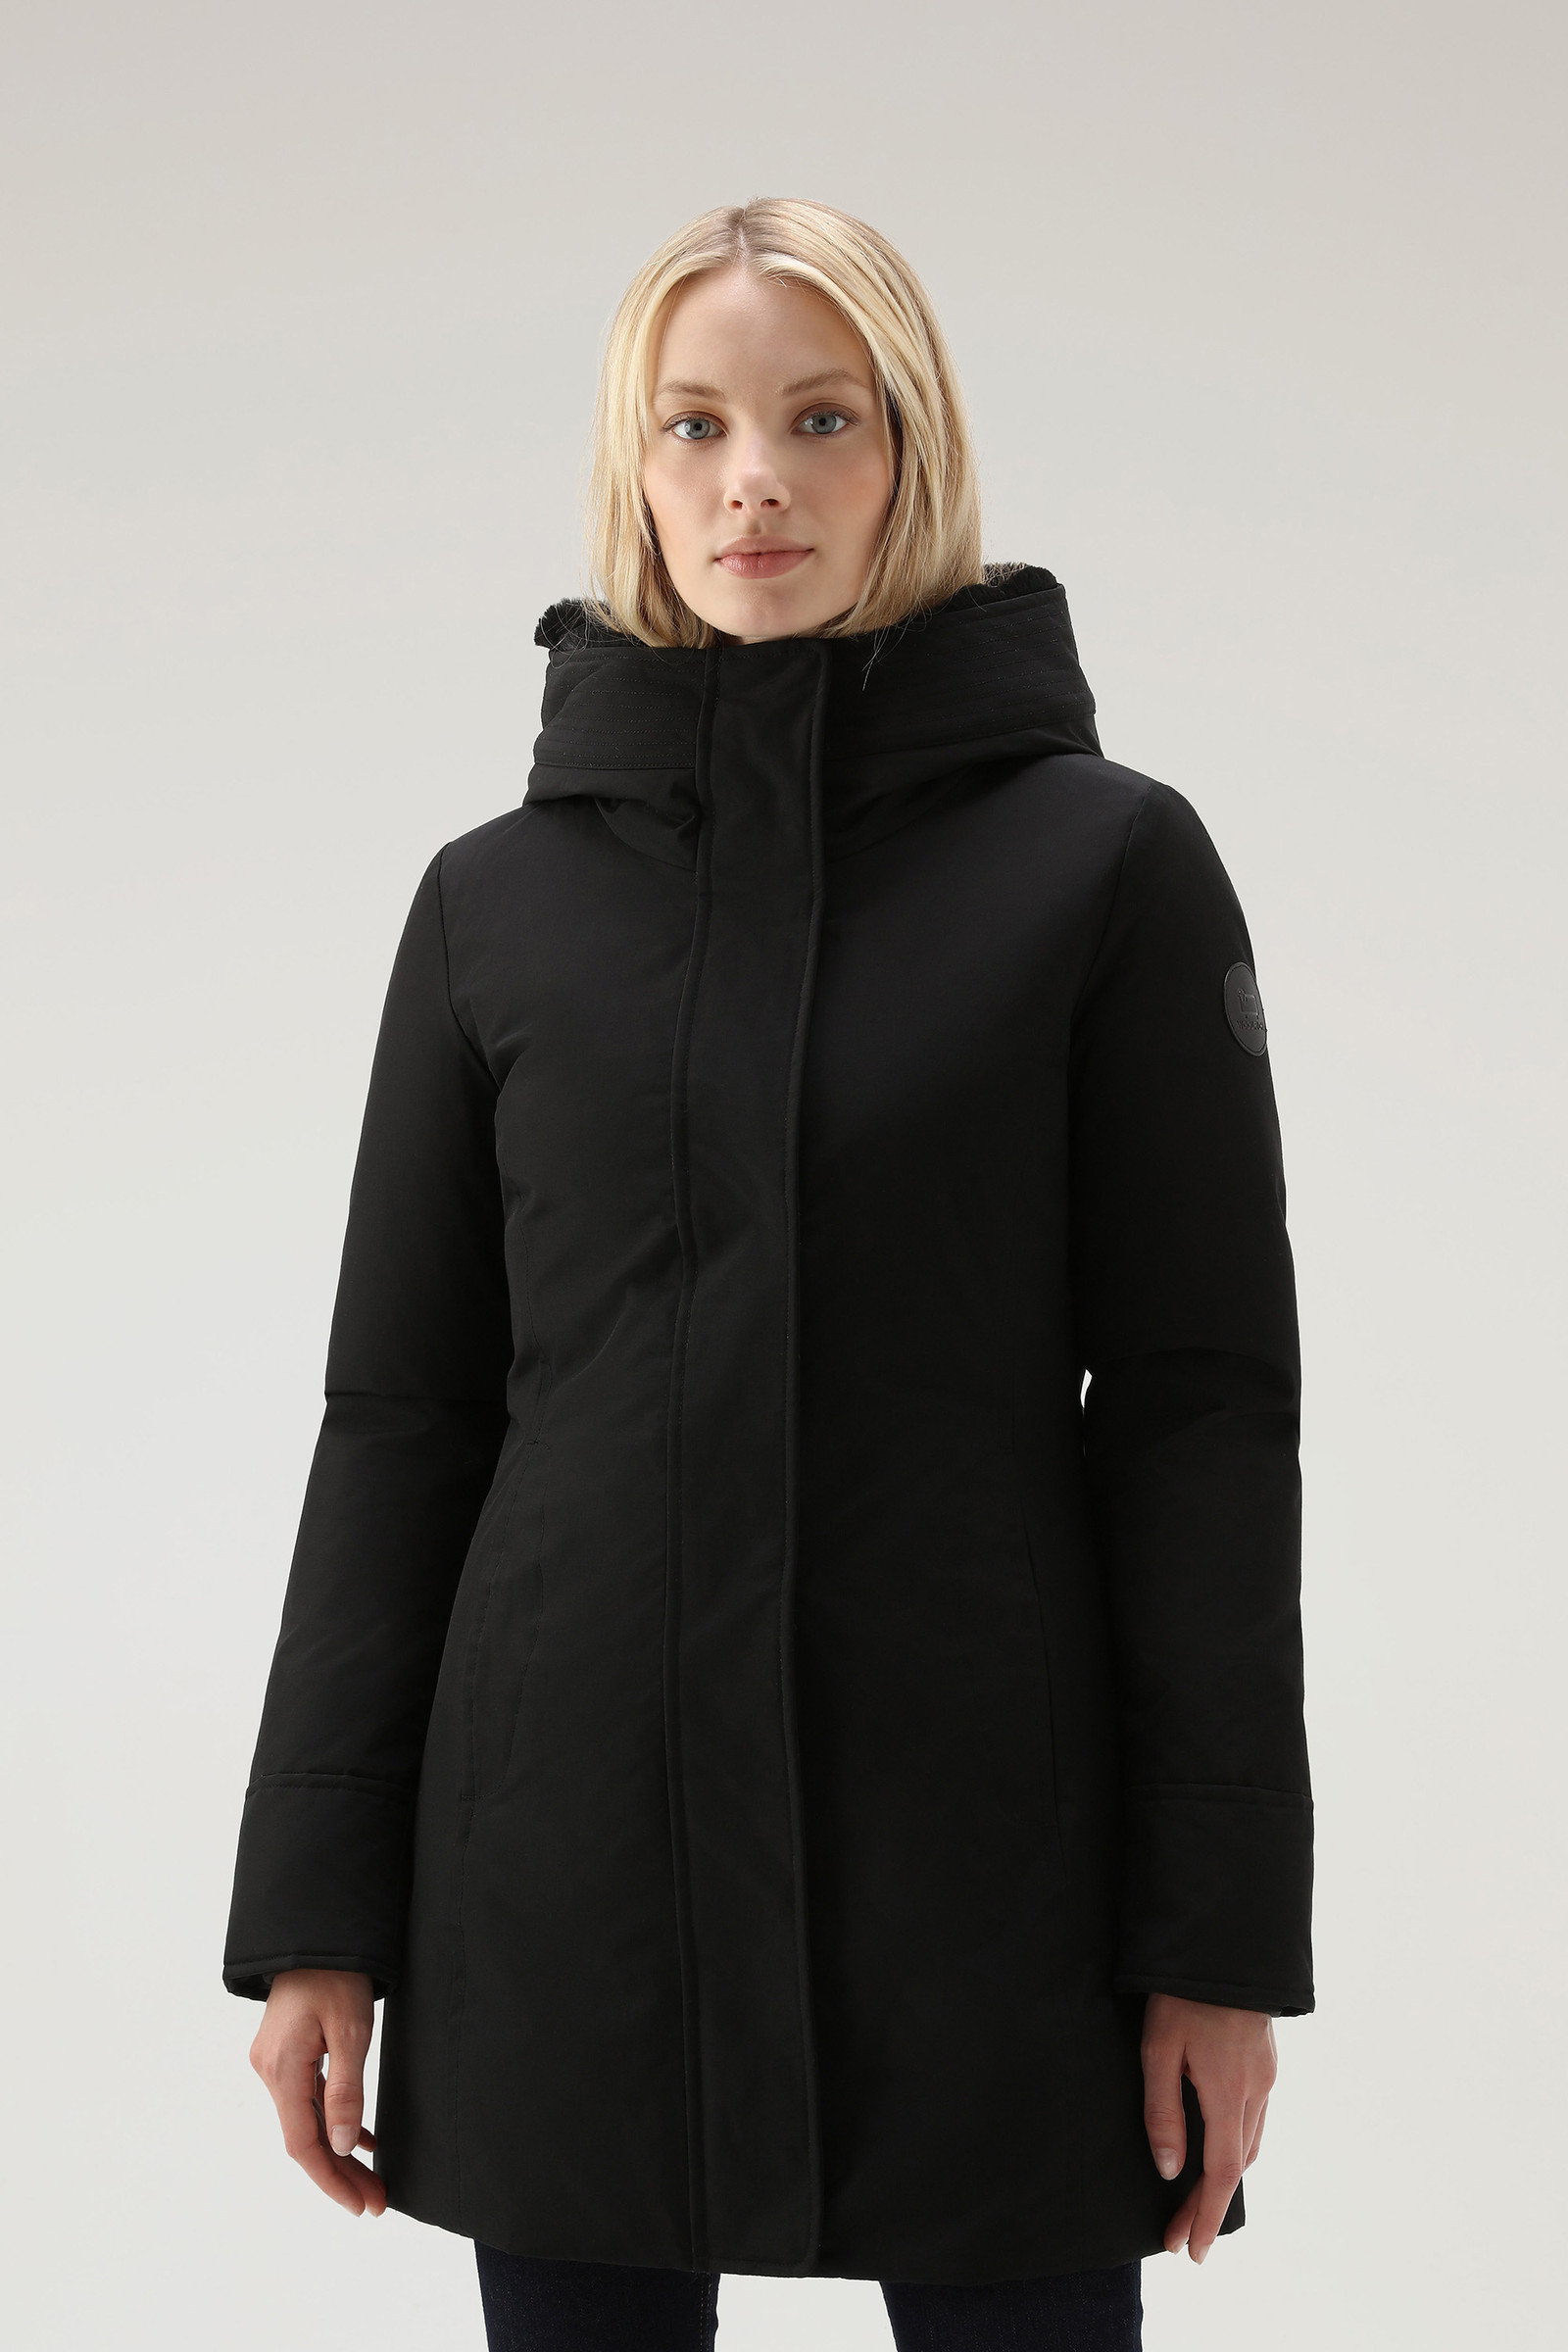 Boulder Parka in Ramar Cloth with Hood and Detachable Faux Fur Trim - Women  - Black